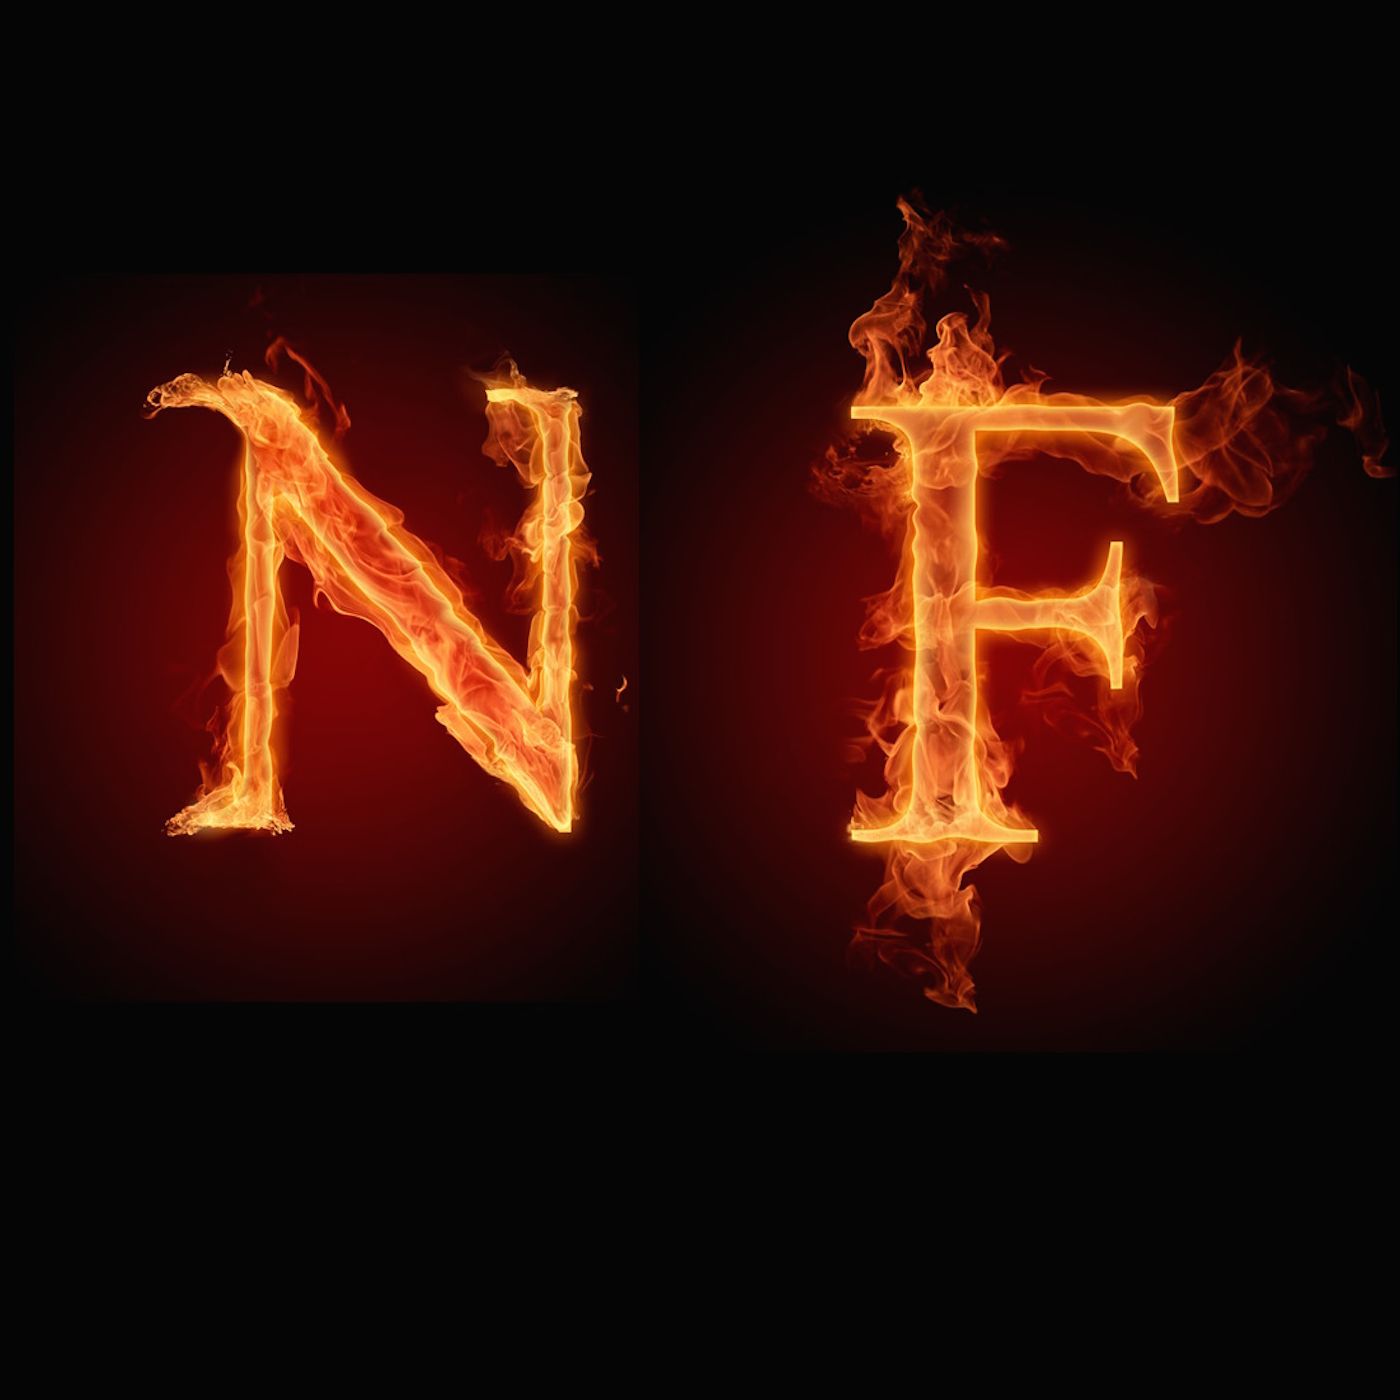 Nerdfire